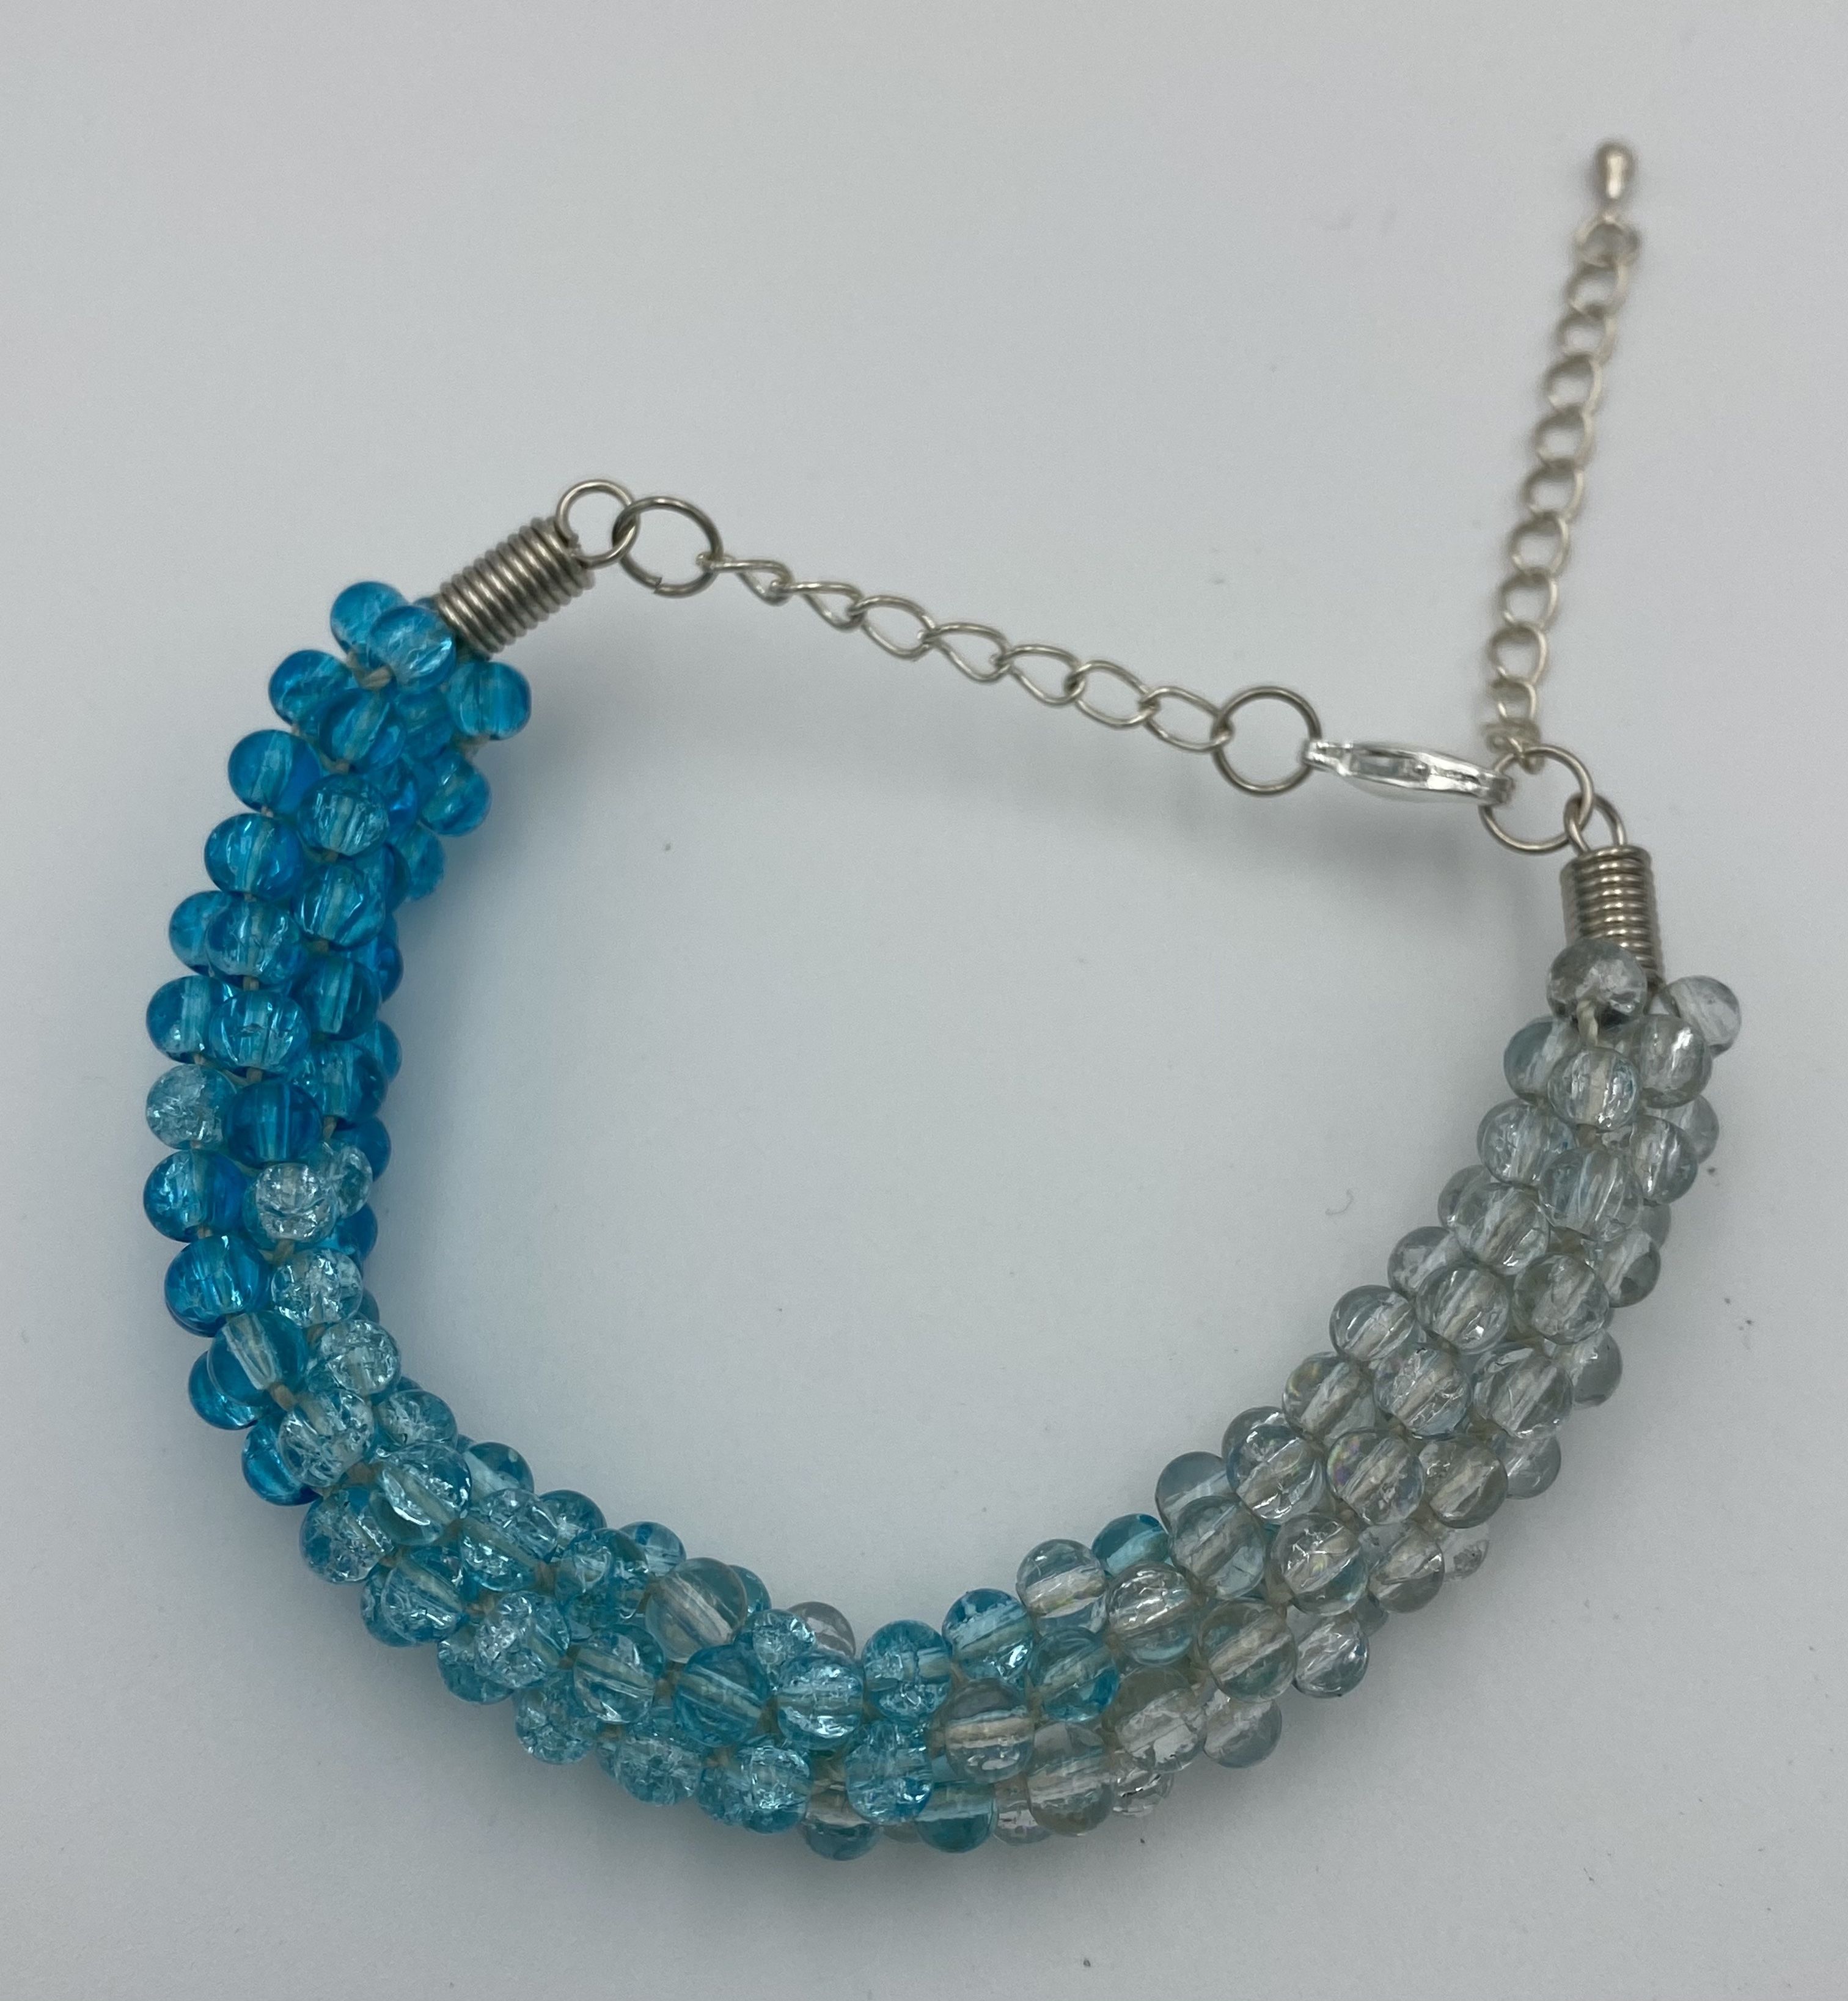 Kumihimo Woven and Beaded Bracelet - Blue and Clear Glass Beads - Handmade Japanese Wristband/Bracelet